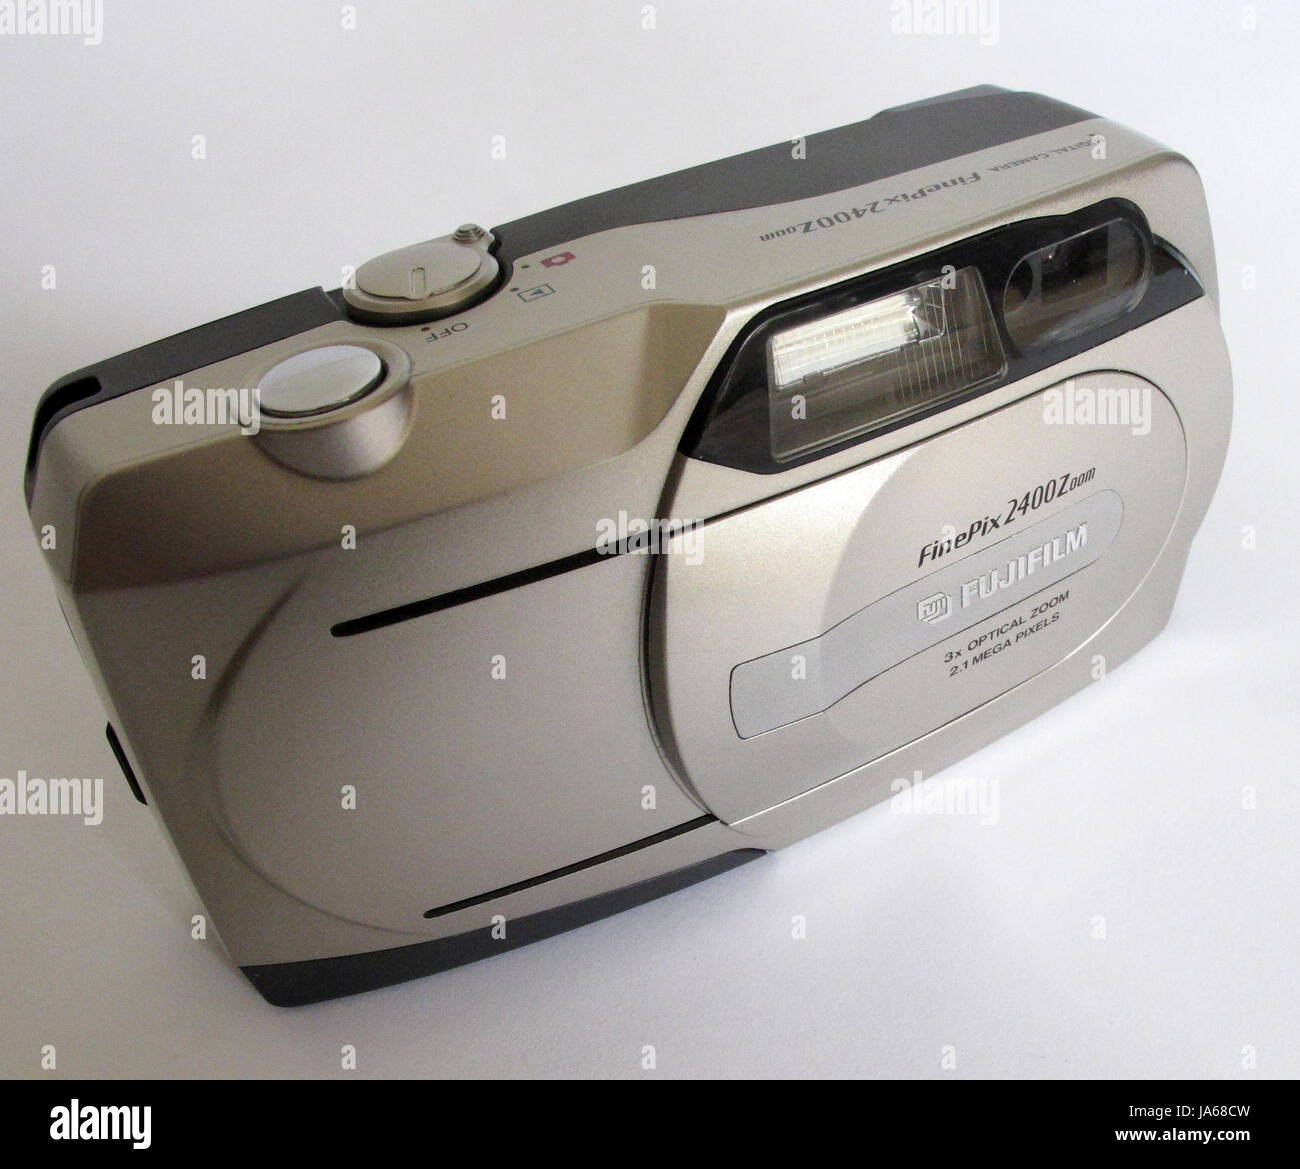 A de bolsillo - Cámara digital Fuji 2400Z. Cámara digital de consumo Fotografía de stock Alamy